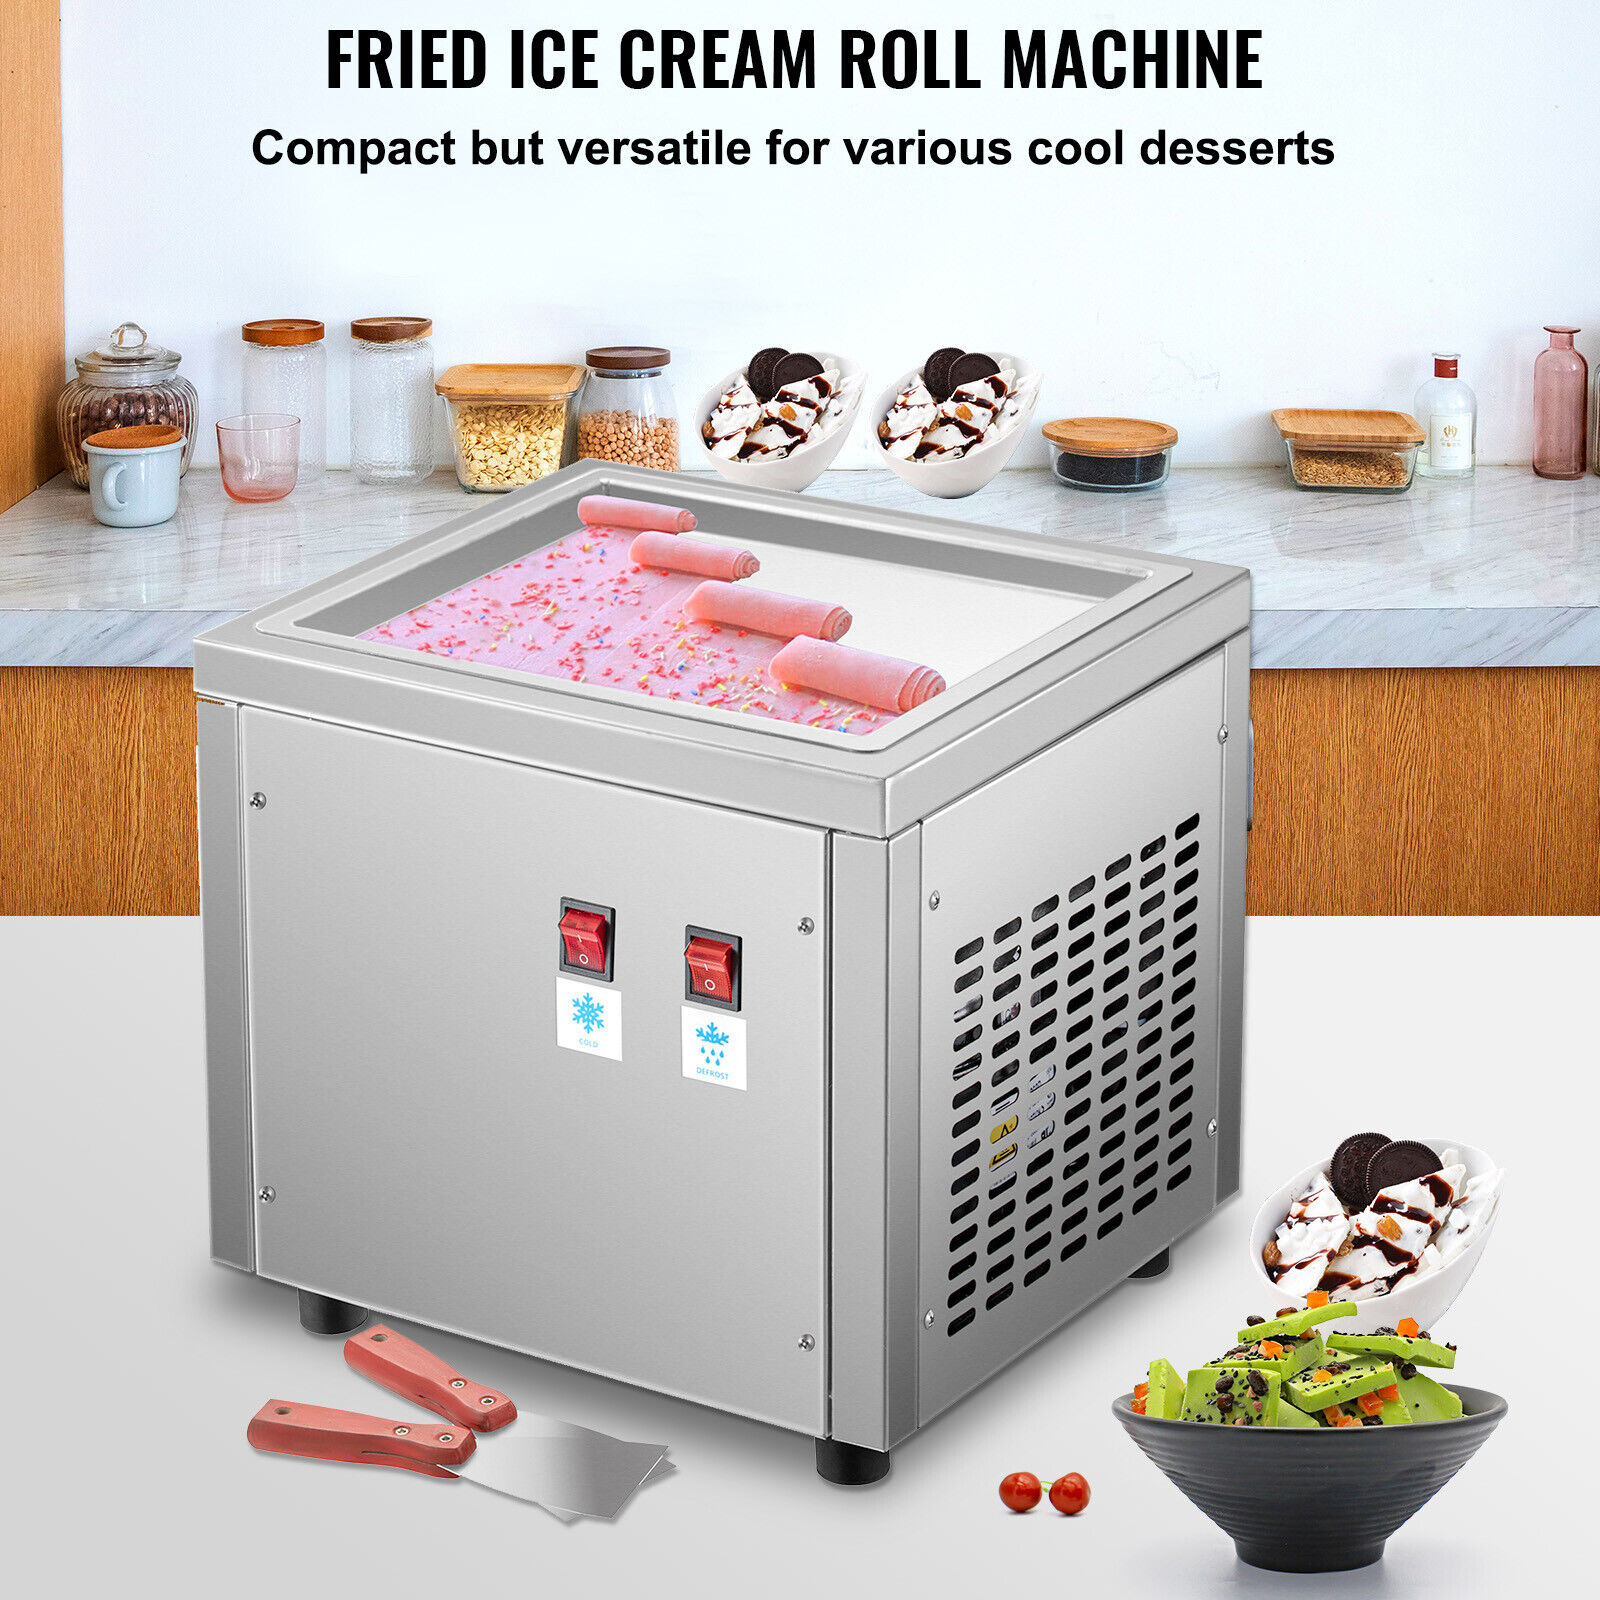 Commercial Fried Ice Roll Maker for Yogurt